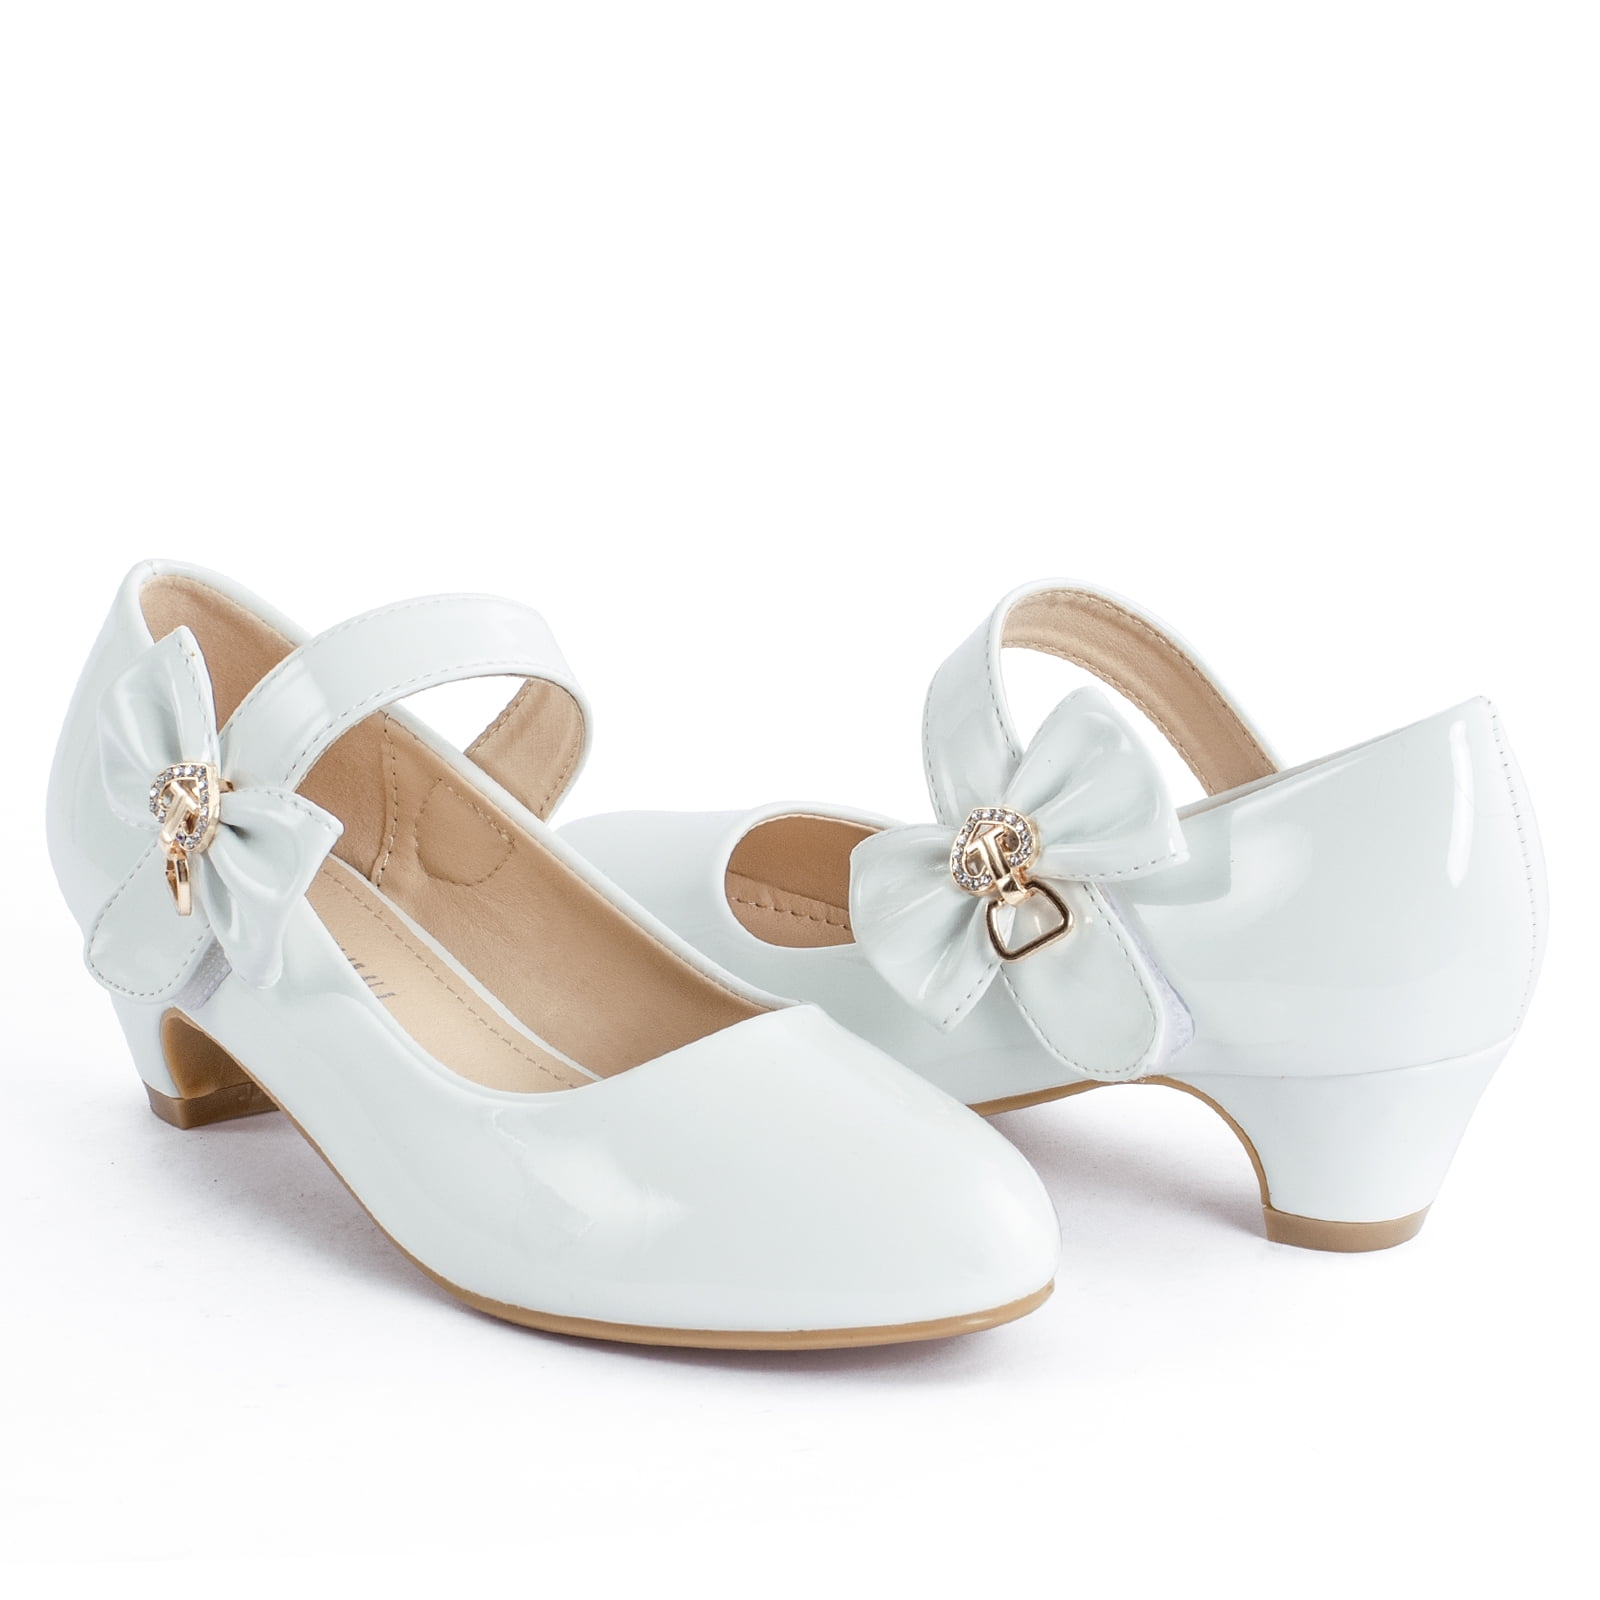 ADAMUMU Dress Shoes for Girls Mary Janes Low Heels Flat Princess Ballet ...